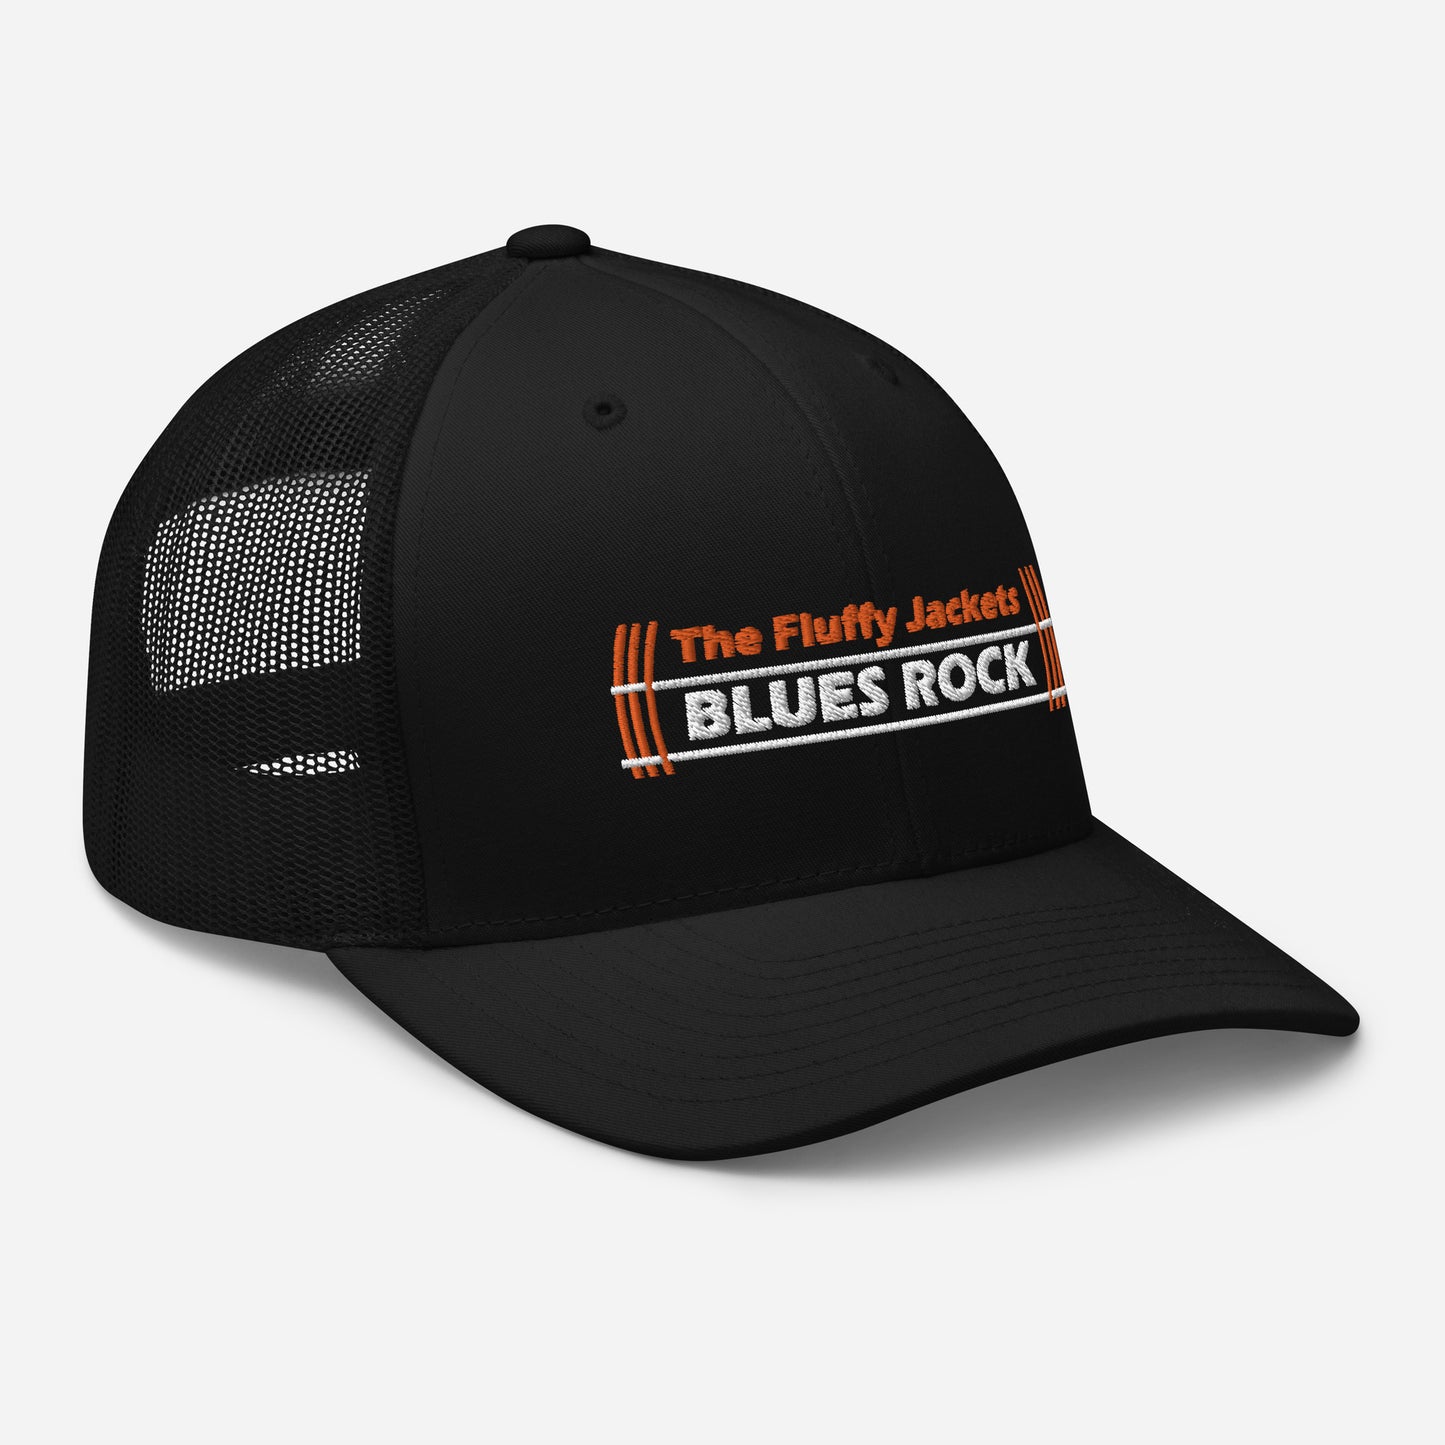 The Fluffy Jackets' Blues Rock Trucker Cap